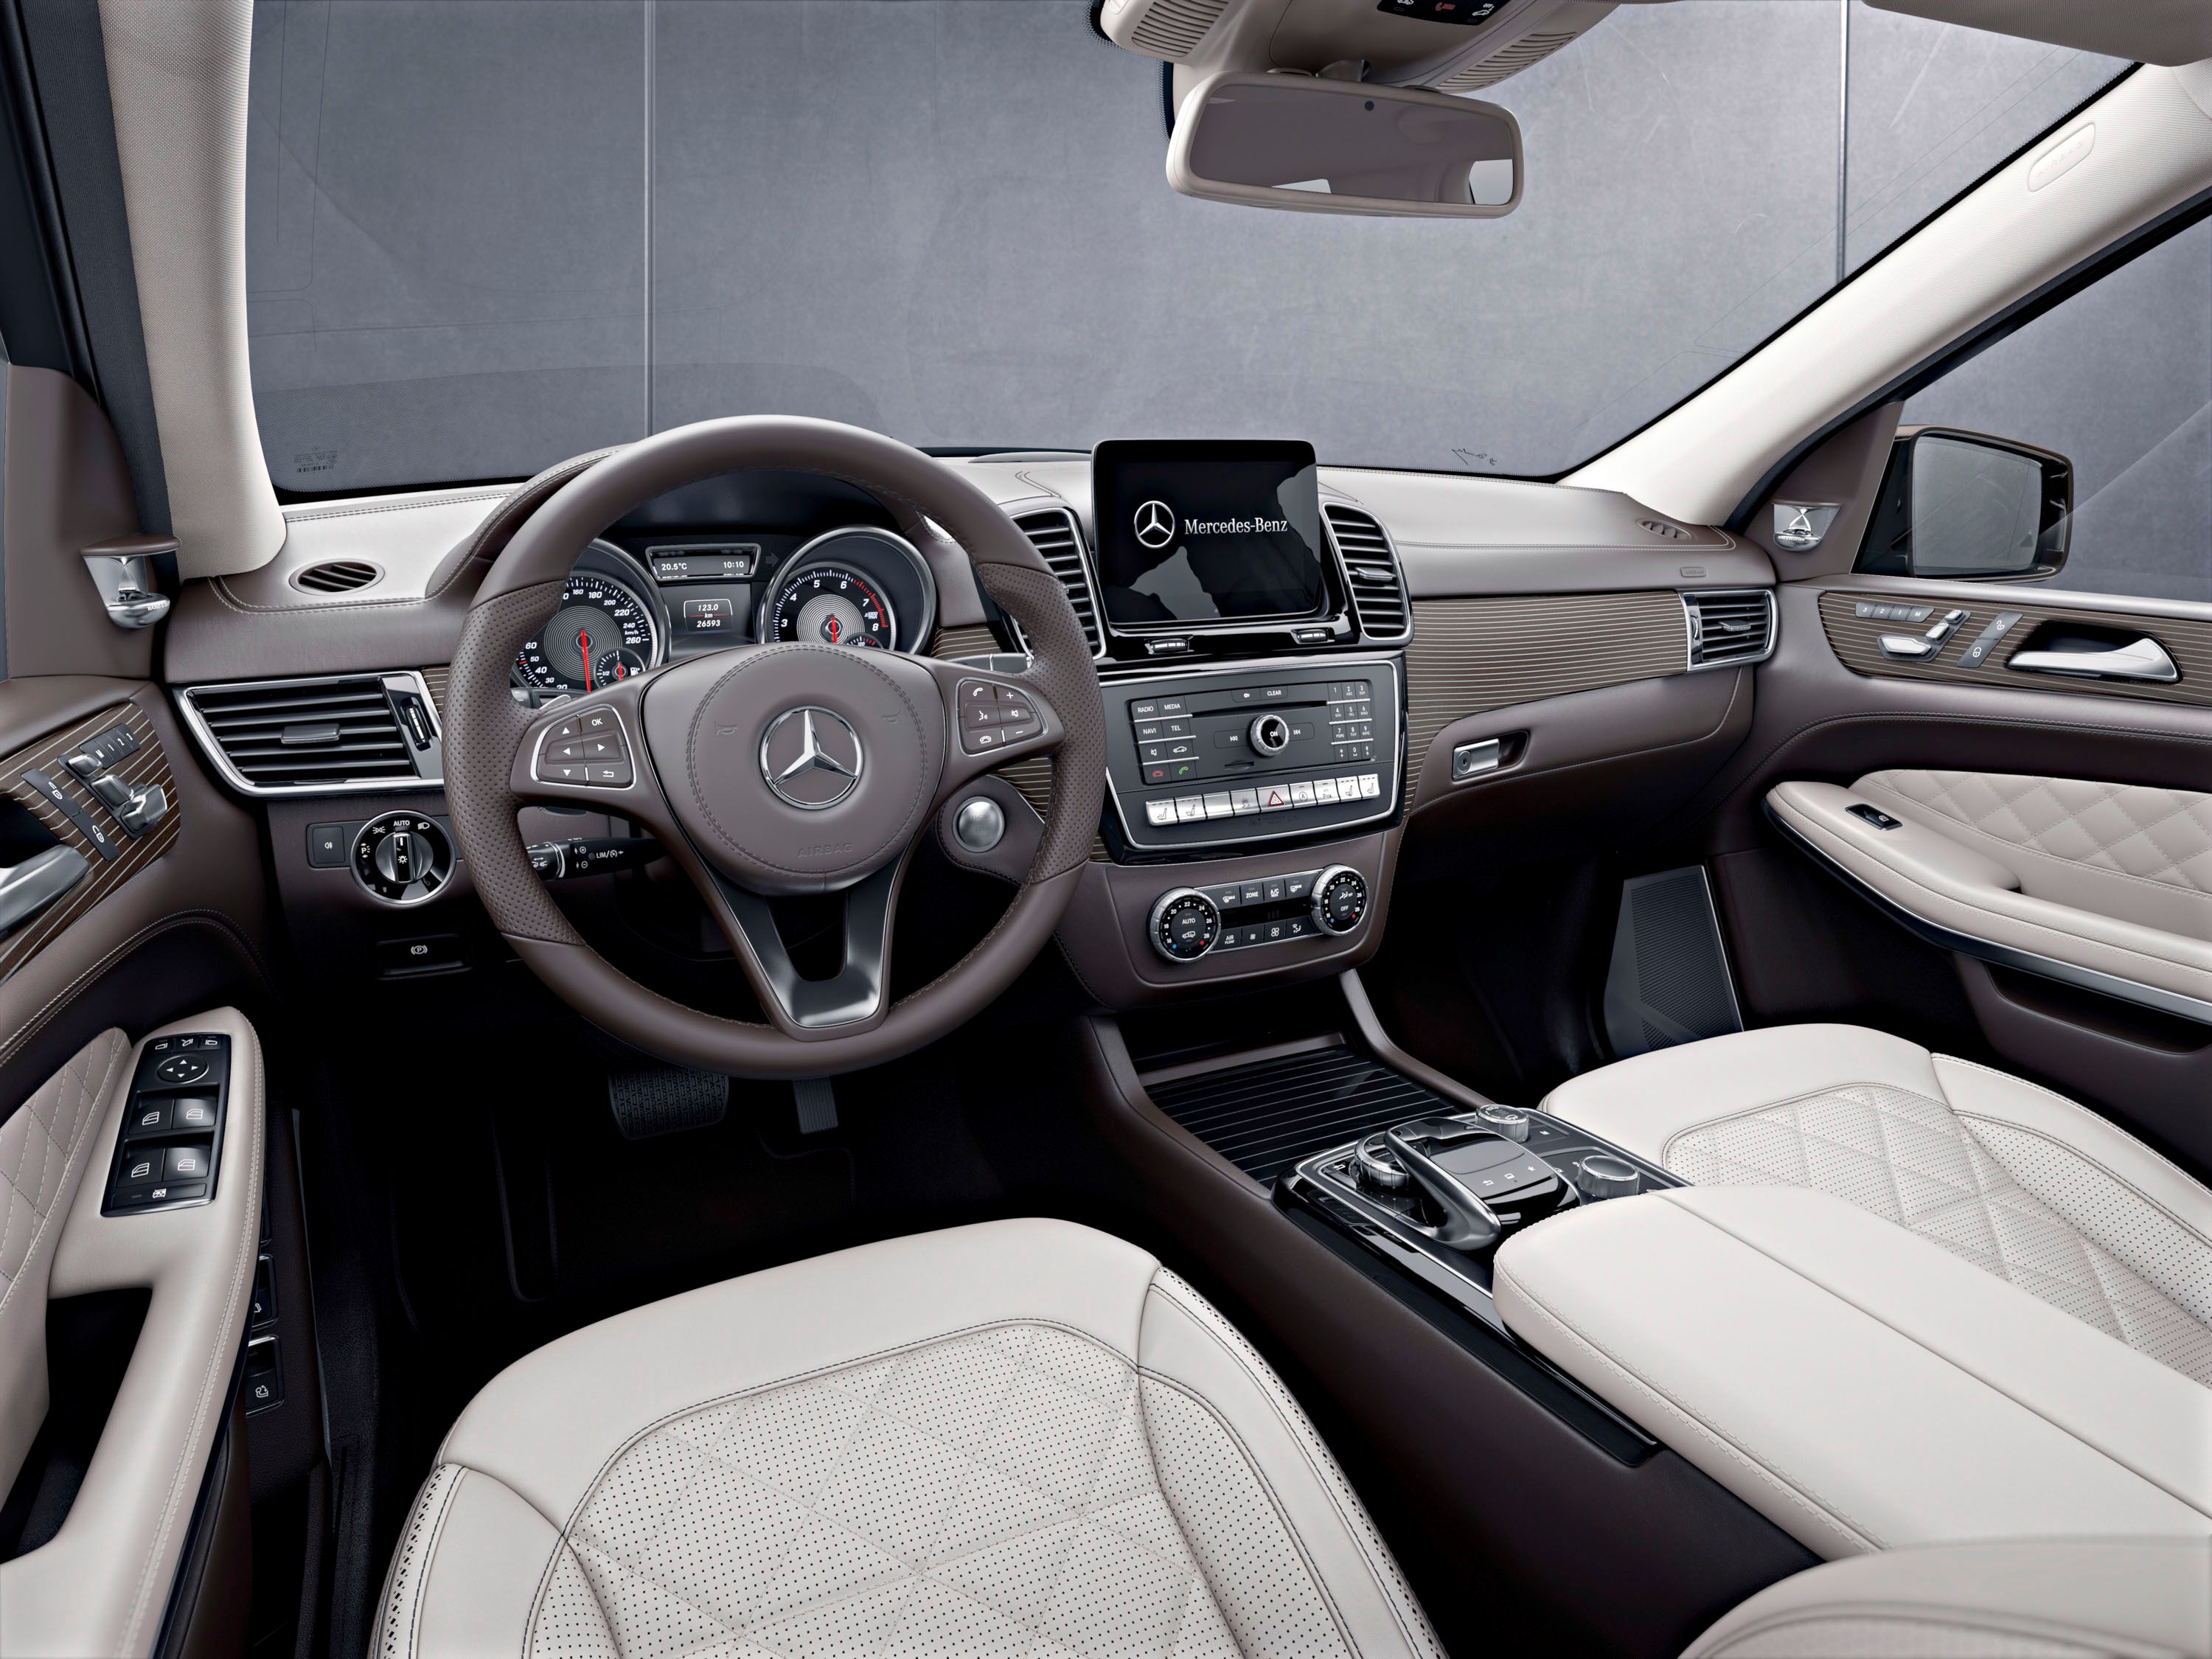 2018 Mercedes GLS GRand Edition - interior